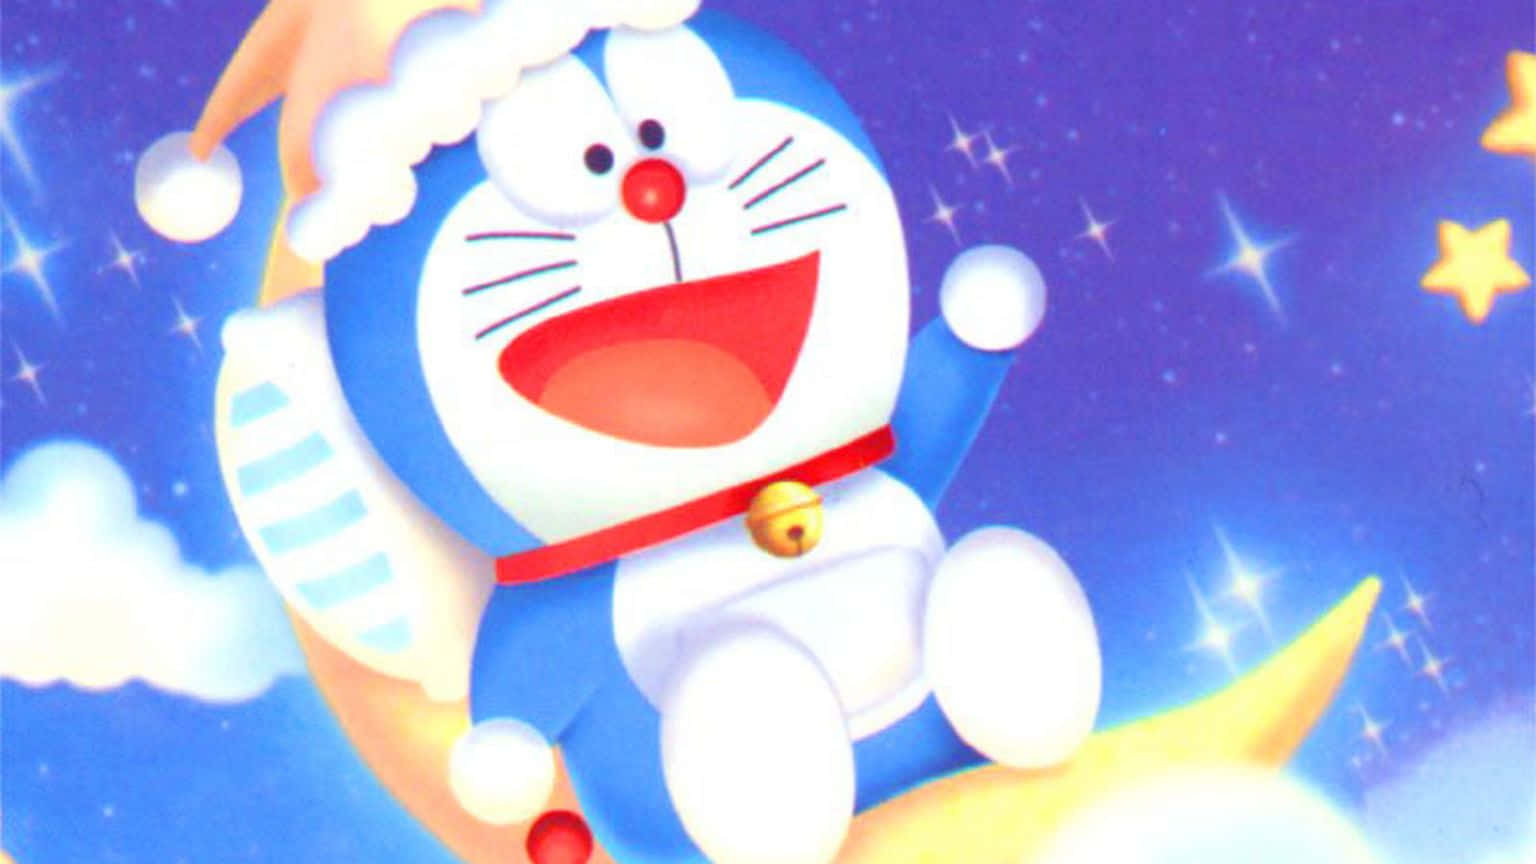 Nobitaog Shizuka Deltager I Doraemon's Magiske Eventyr!